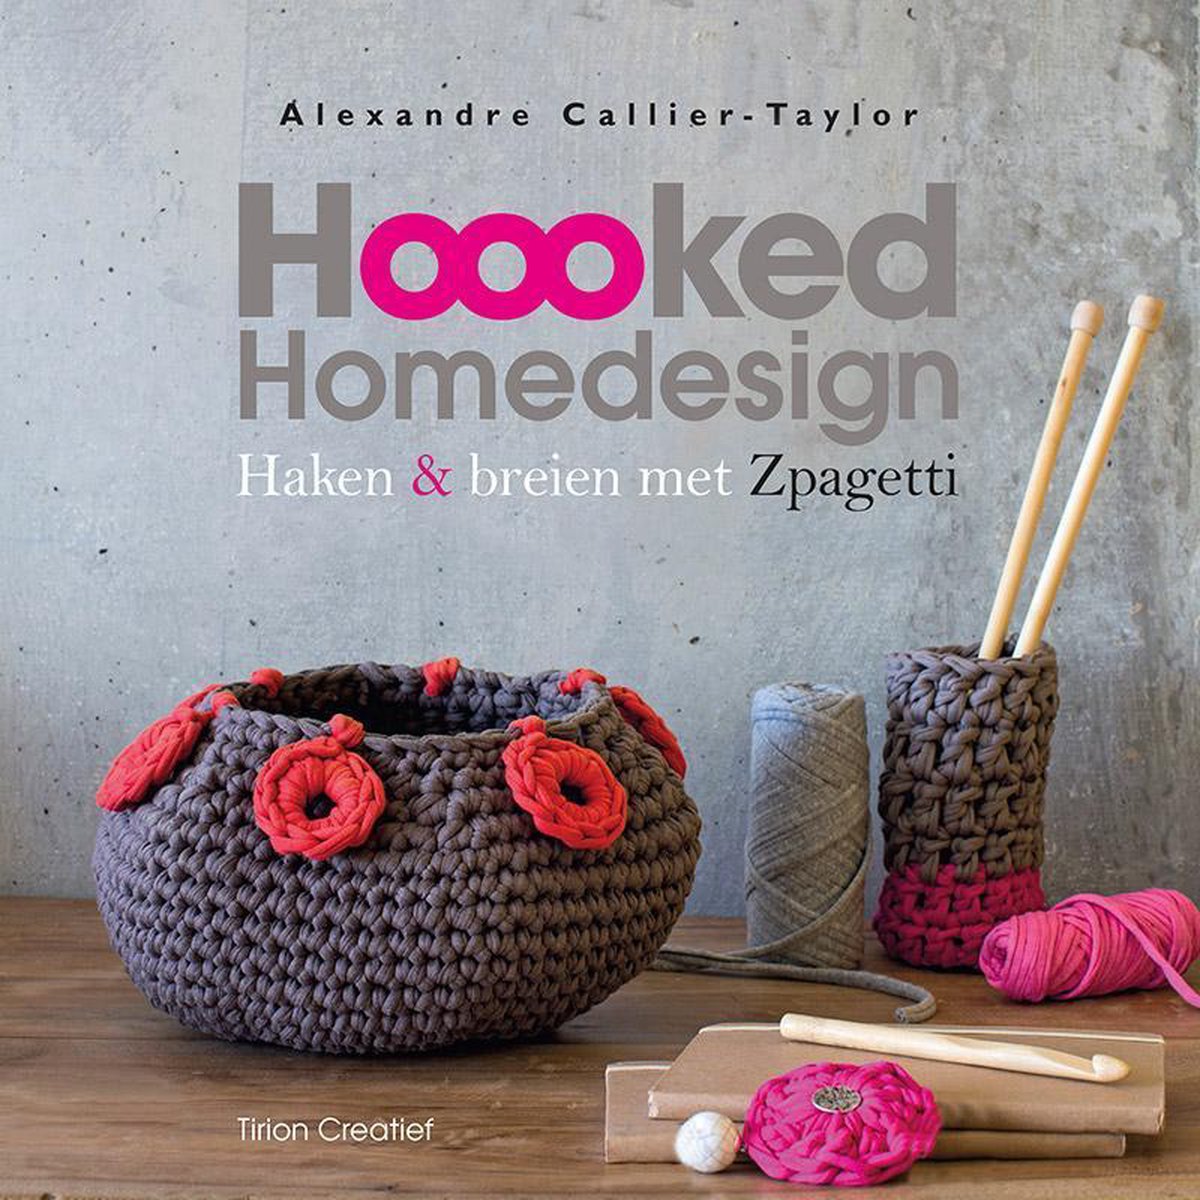 bol.com | Hoooked homedesign, Alexandre Callier-Taylor | 9789043917278 |  Boeken